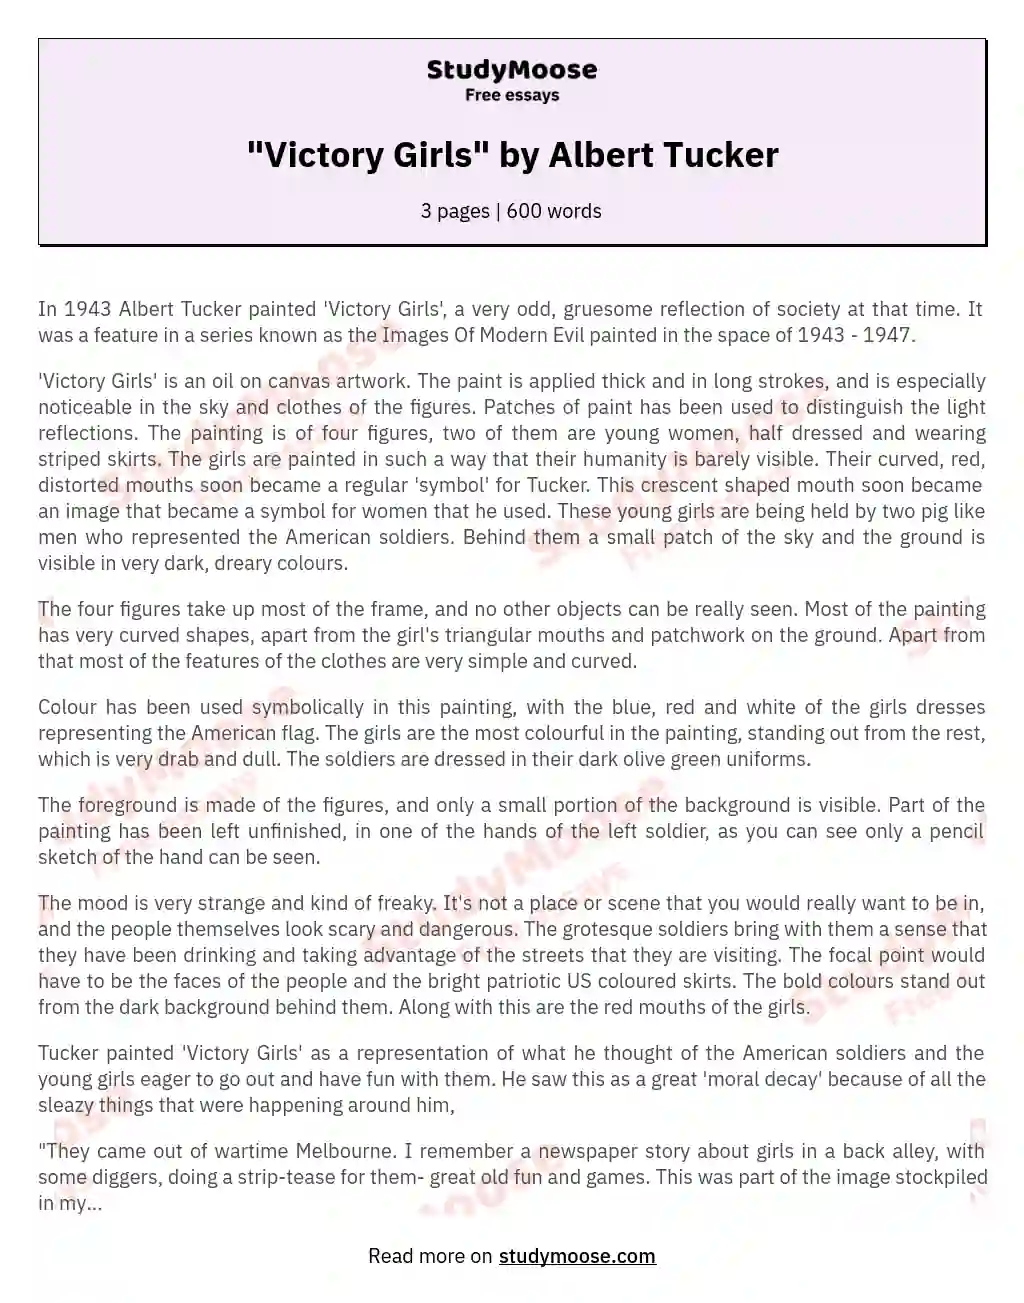 "Victory Girls" by Albert Tucker essay